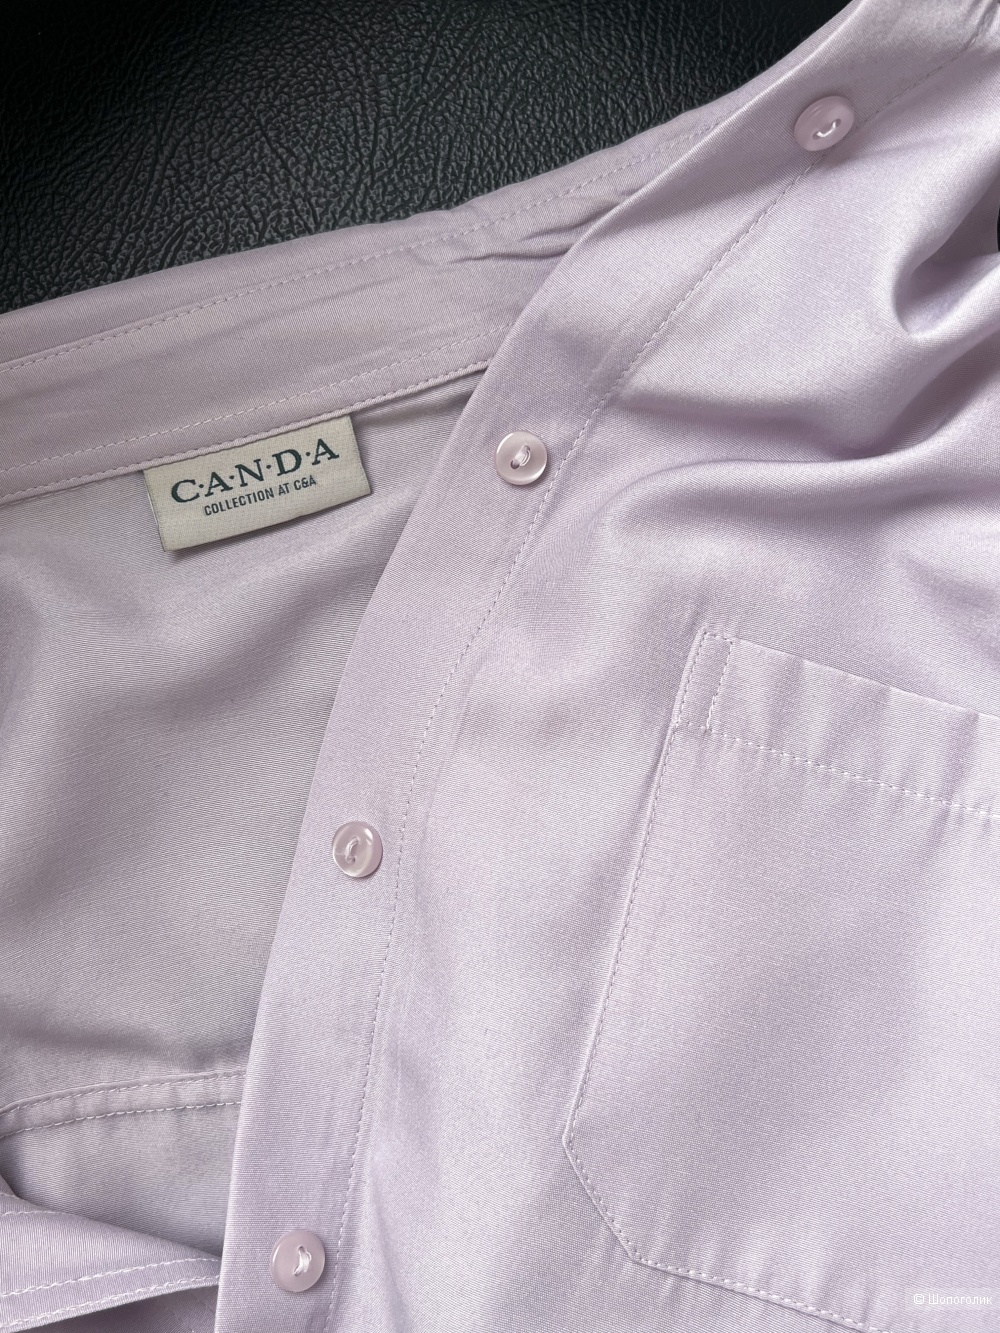 Рубашка C&A Canda (S-XL)